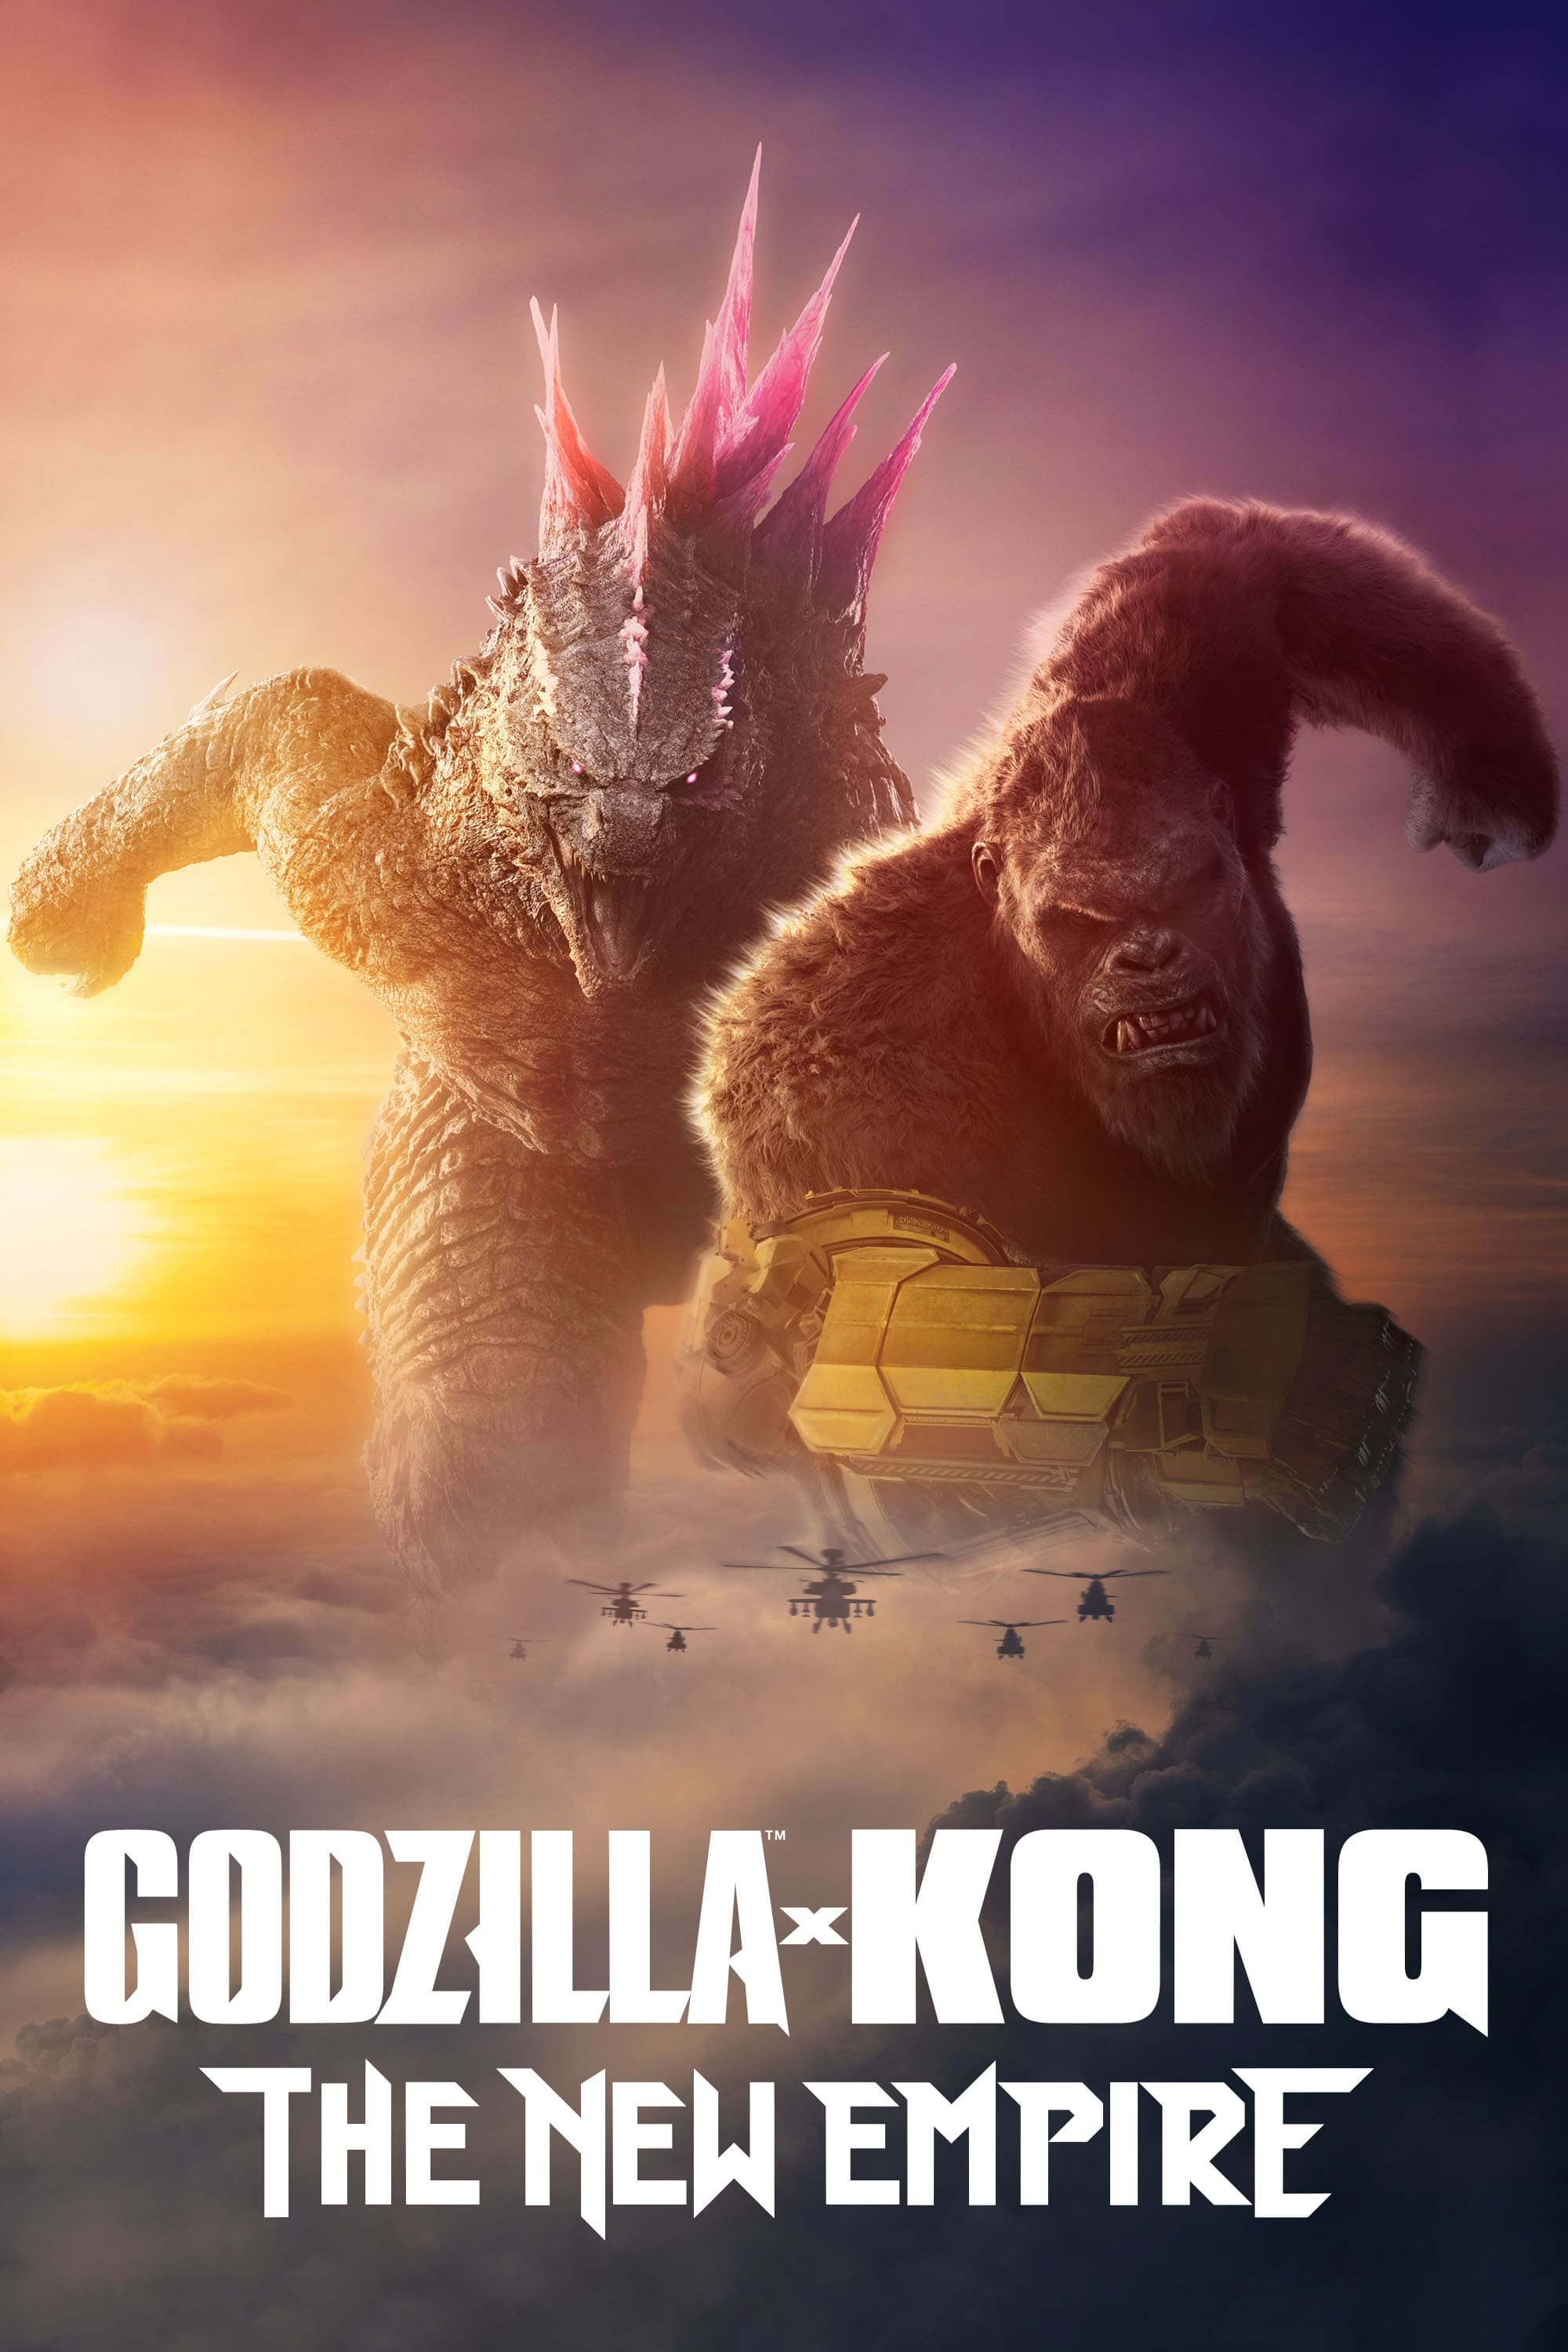 Image for movie Godzilla x Kong: The New Empire